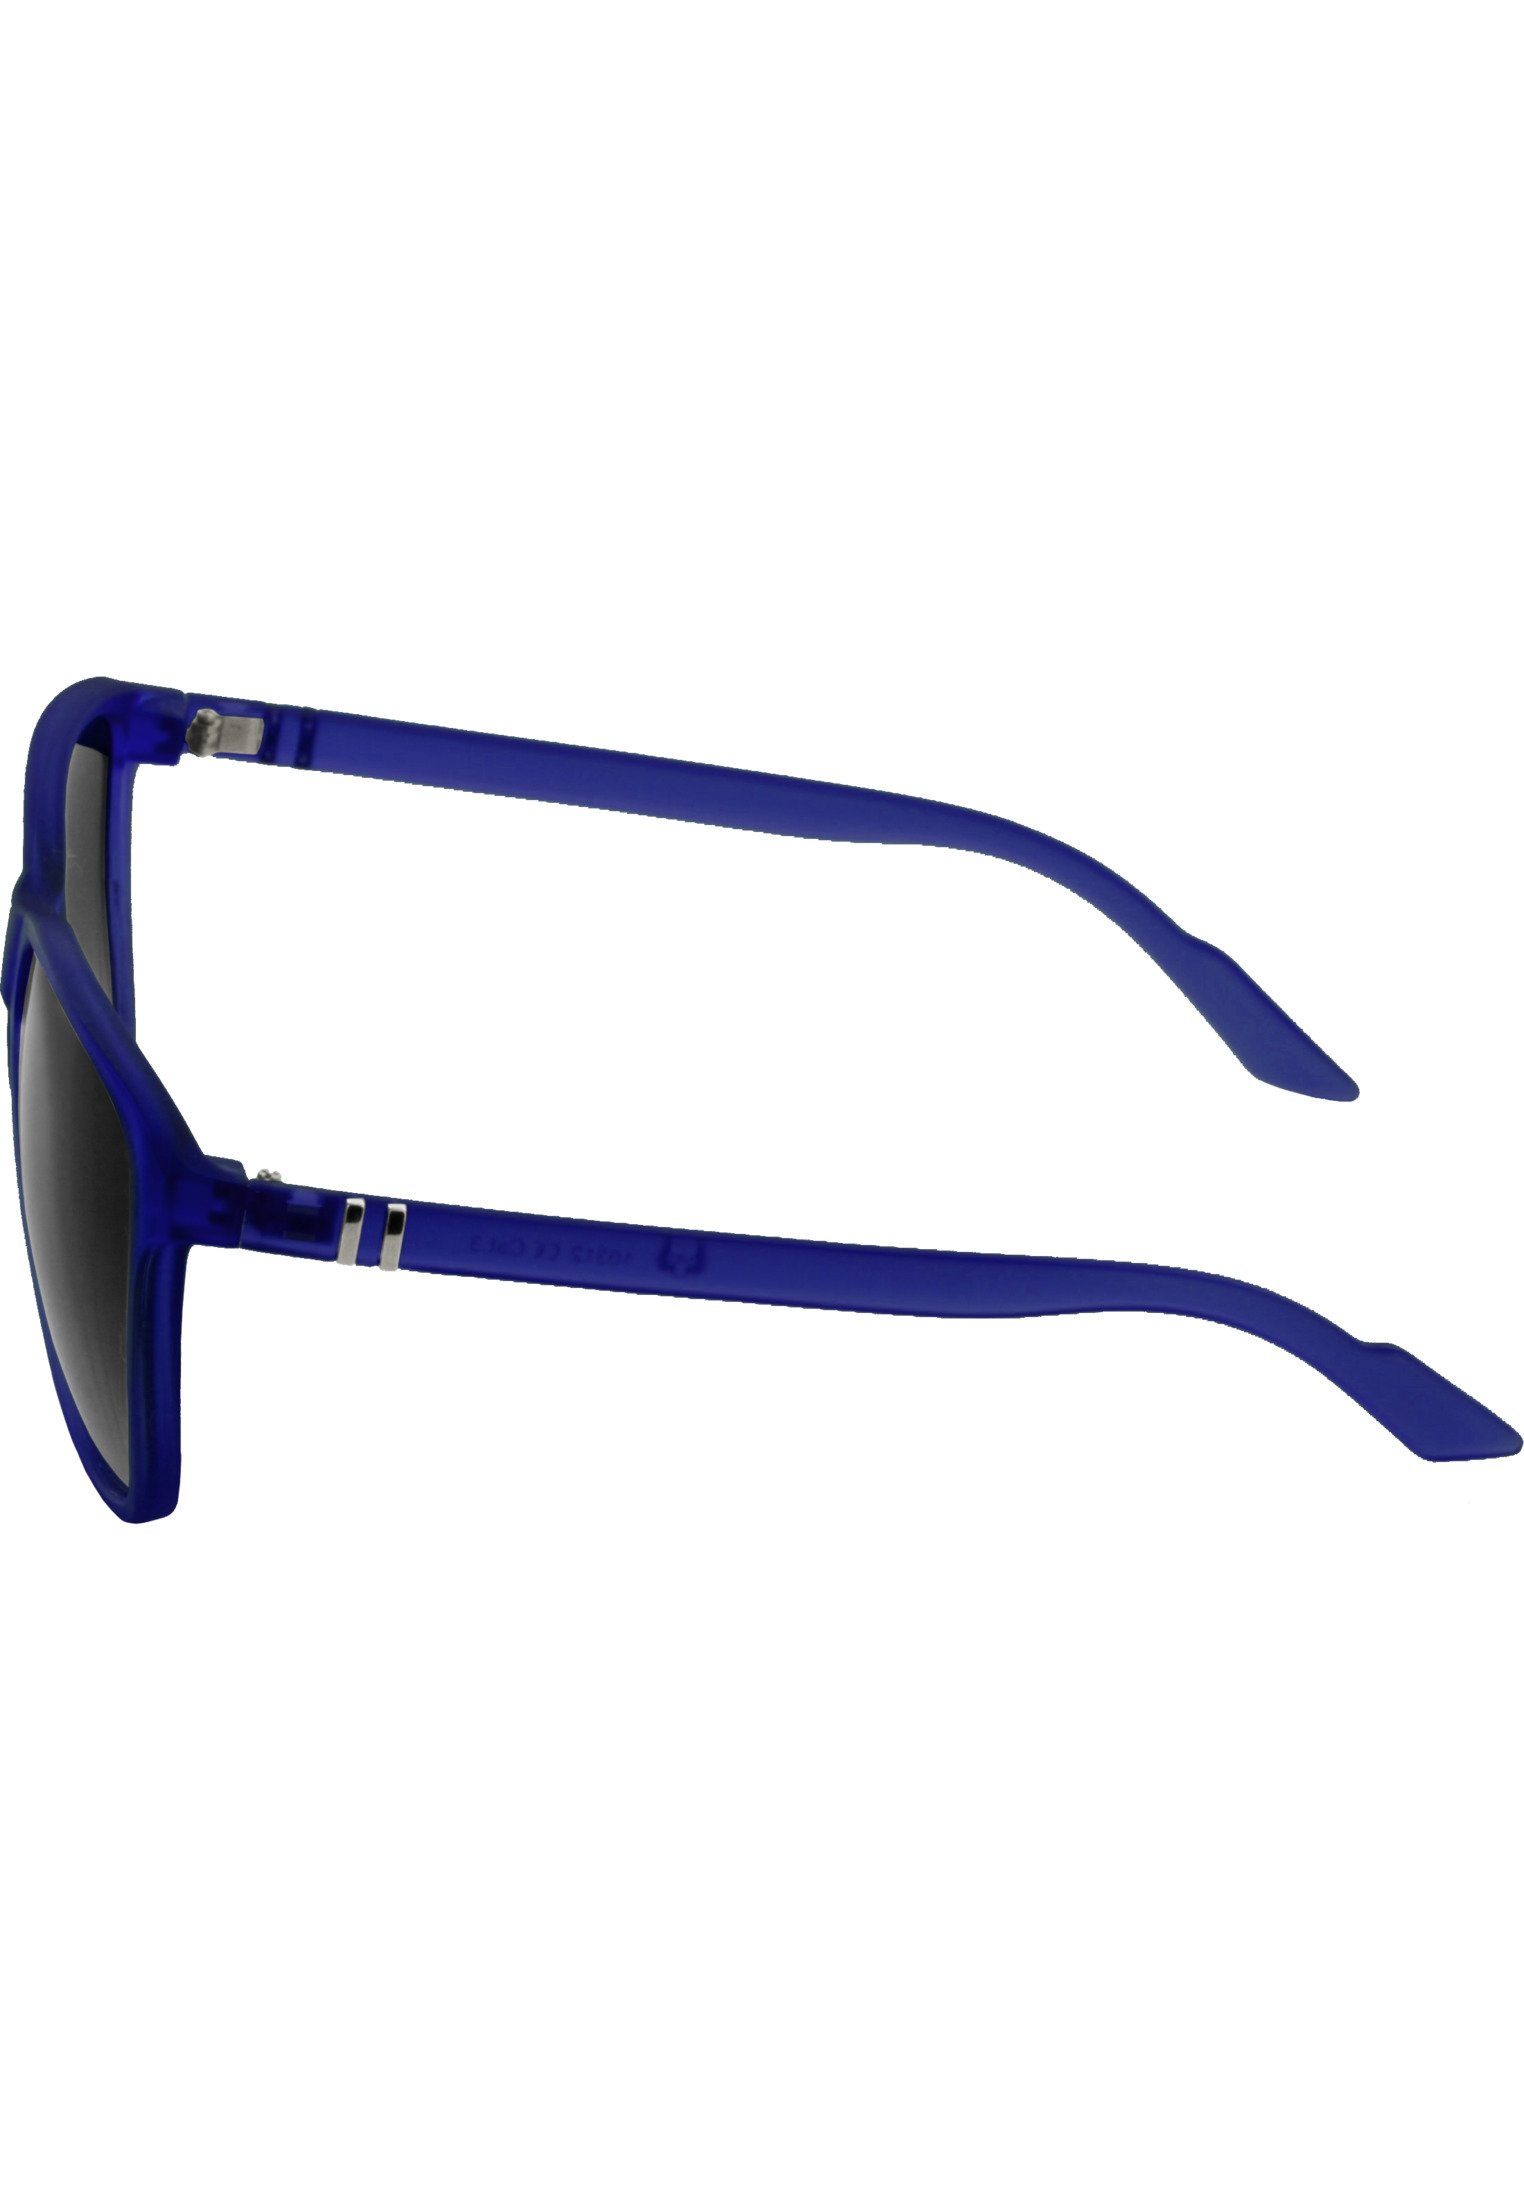 Sunglasses royal Sonnenbrille MSTRDS Chirwa Accessoires